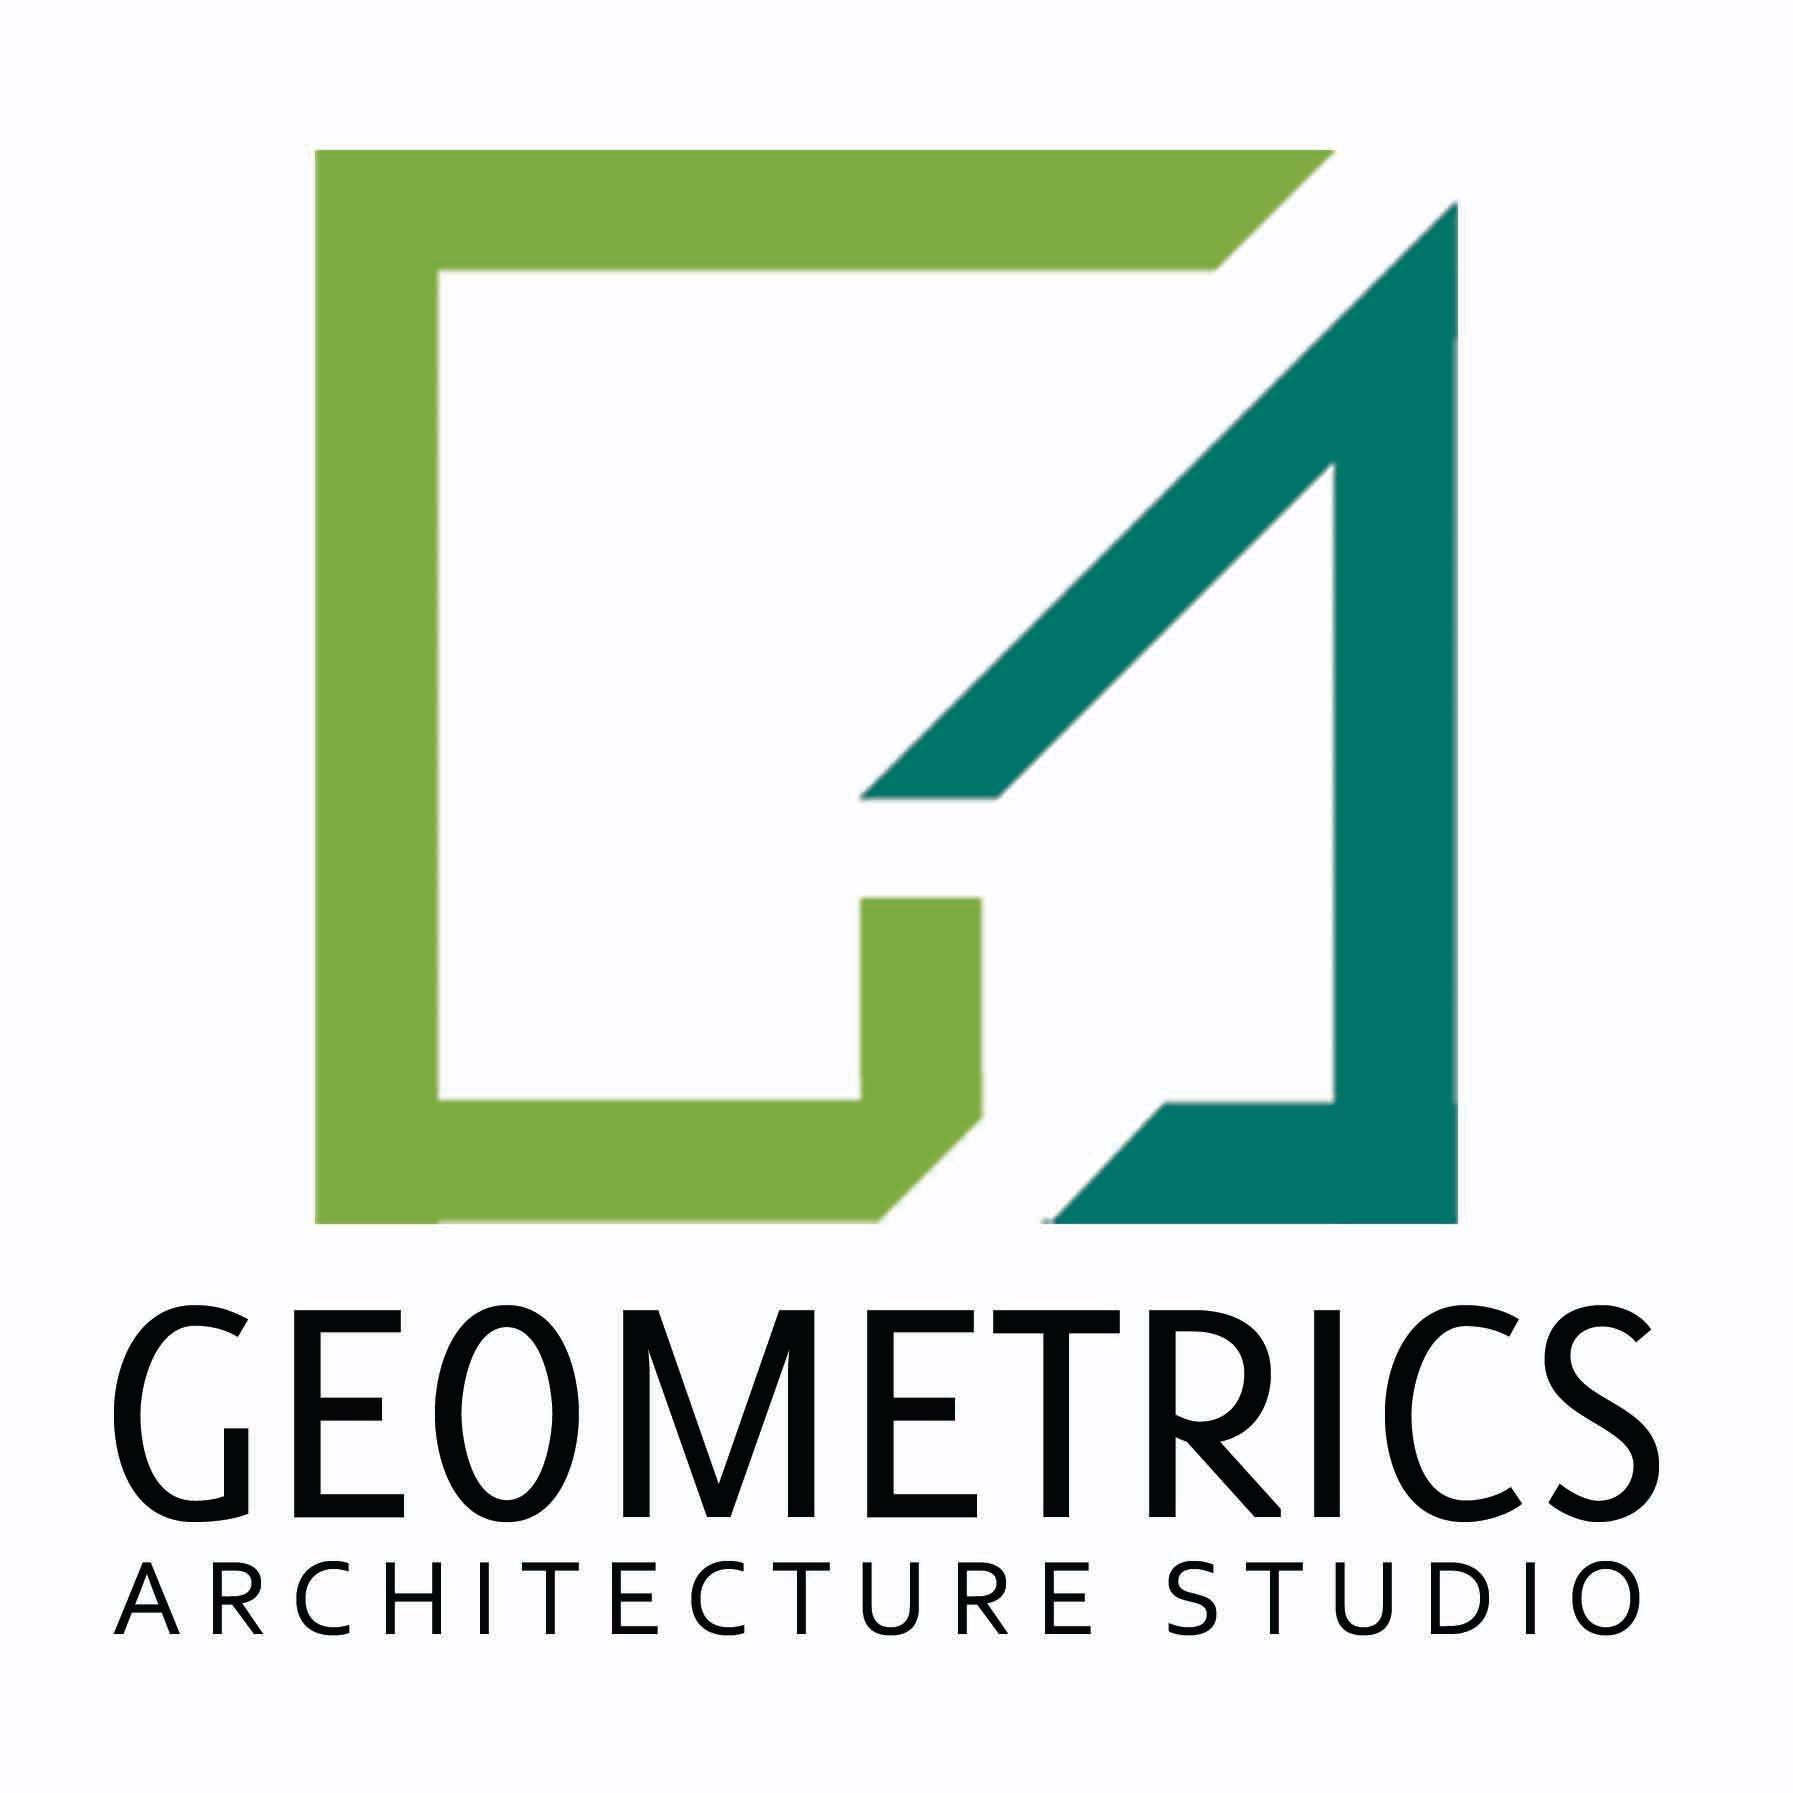 Geometrics Architecture Studio - Logo